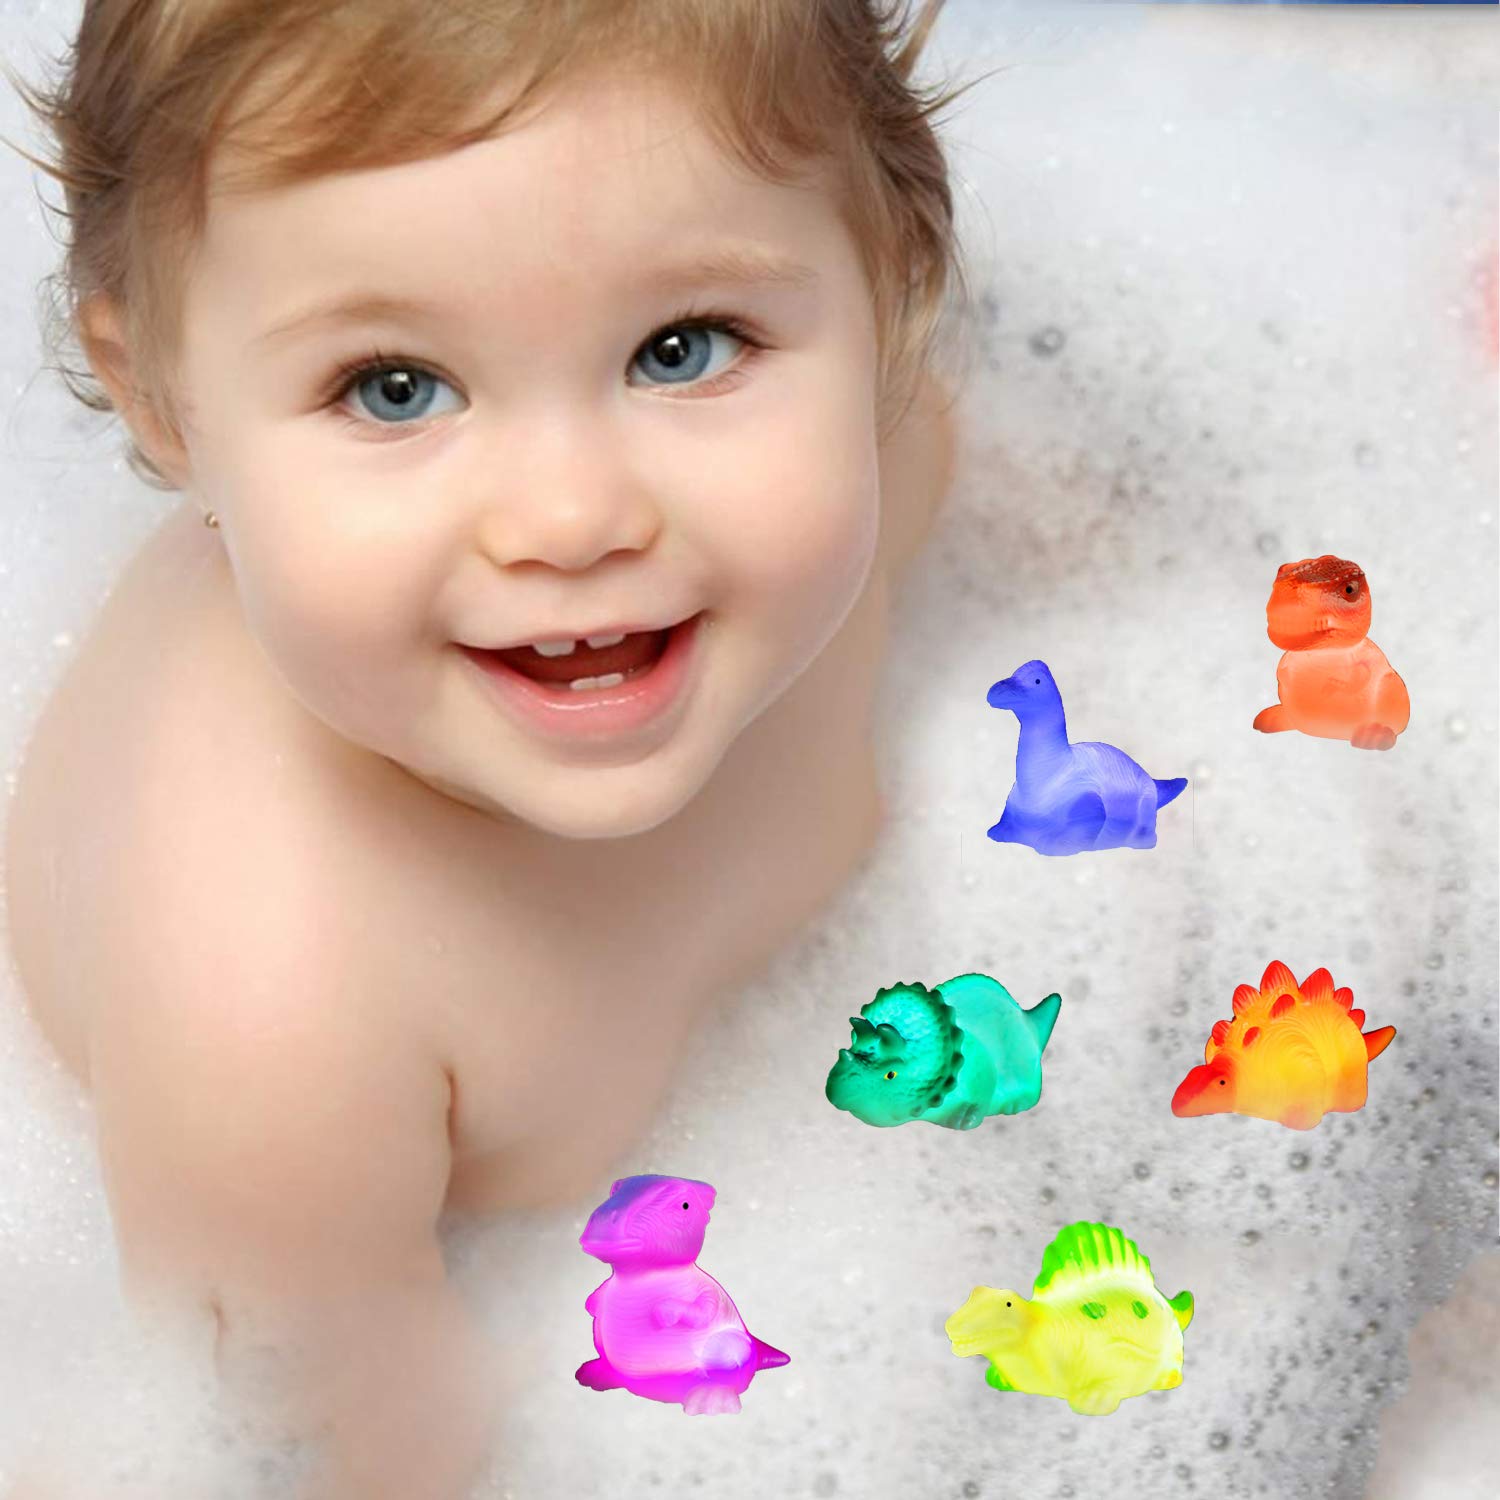 Jomyfant Dinosaur Bath Toys Light Up Floating Rubber Toys(6 Packs),Flashing Color Changing Light in Water,Baby Infants Kids Toddler Child Preschool Bathtub Bathroom